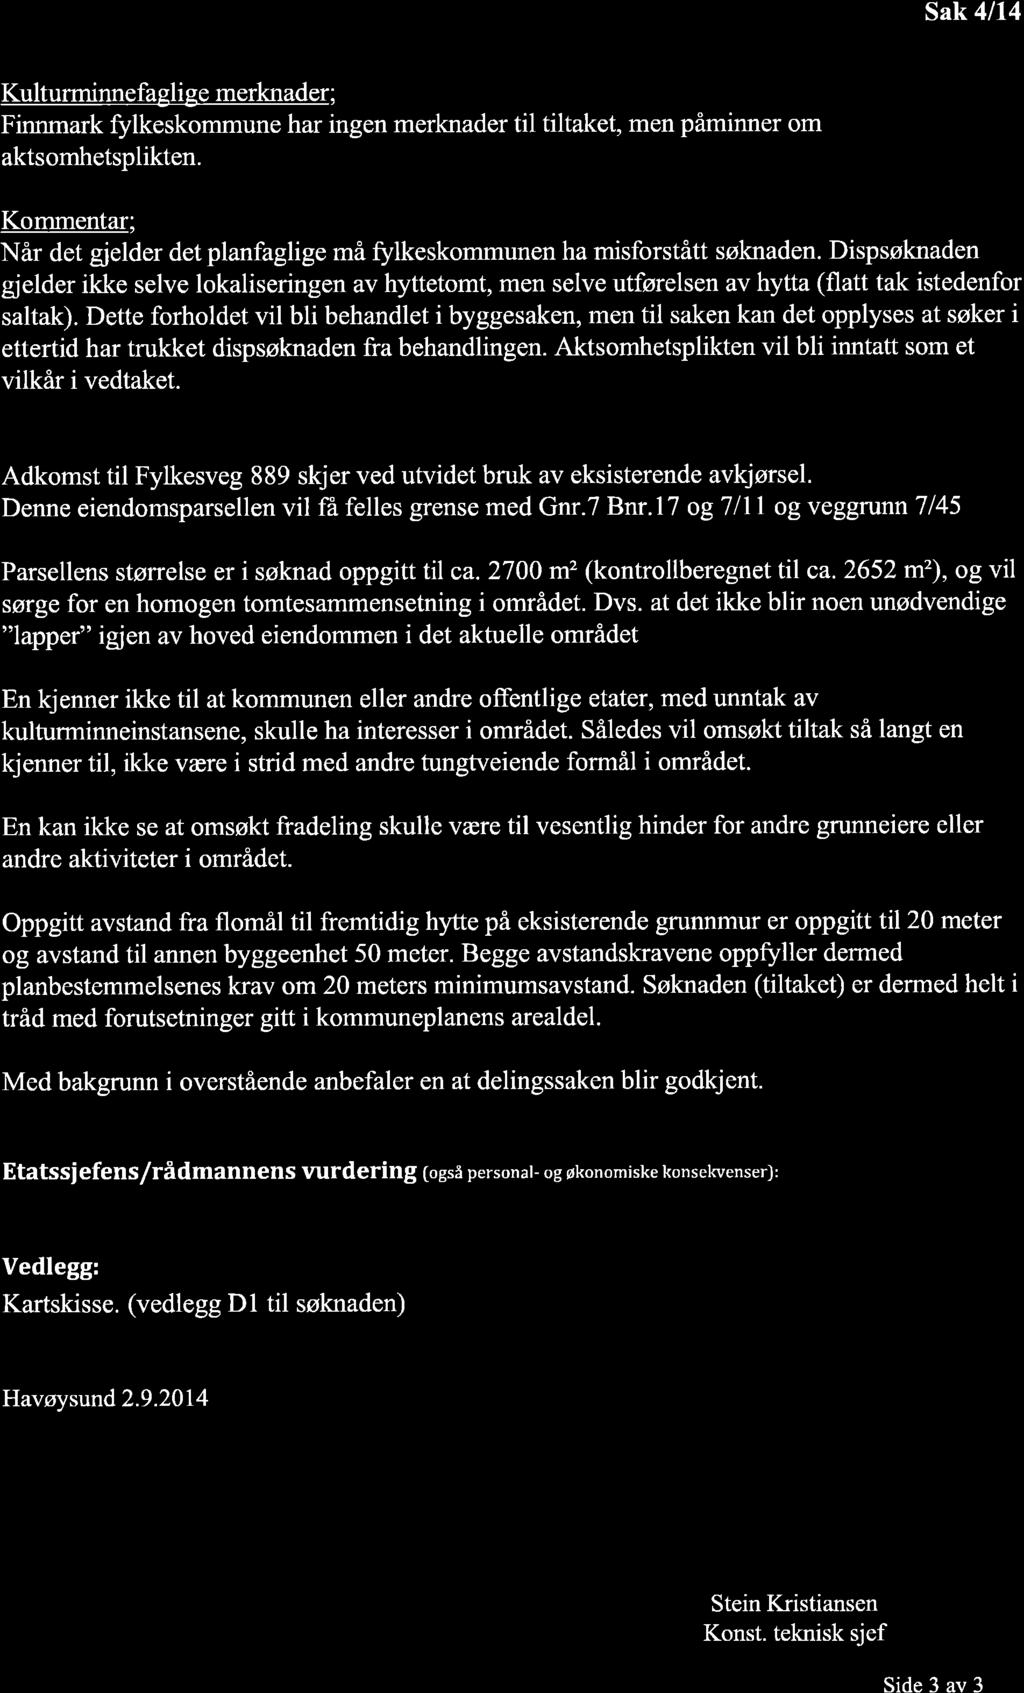 Sak 4/14 Kulurminnefaglige merknader; Finnmark fflkeskommune har ingen merknader il ilake, men påminner om aksomhespliken.